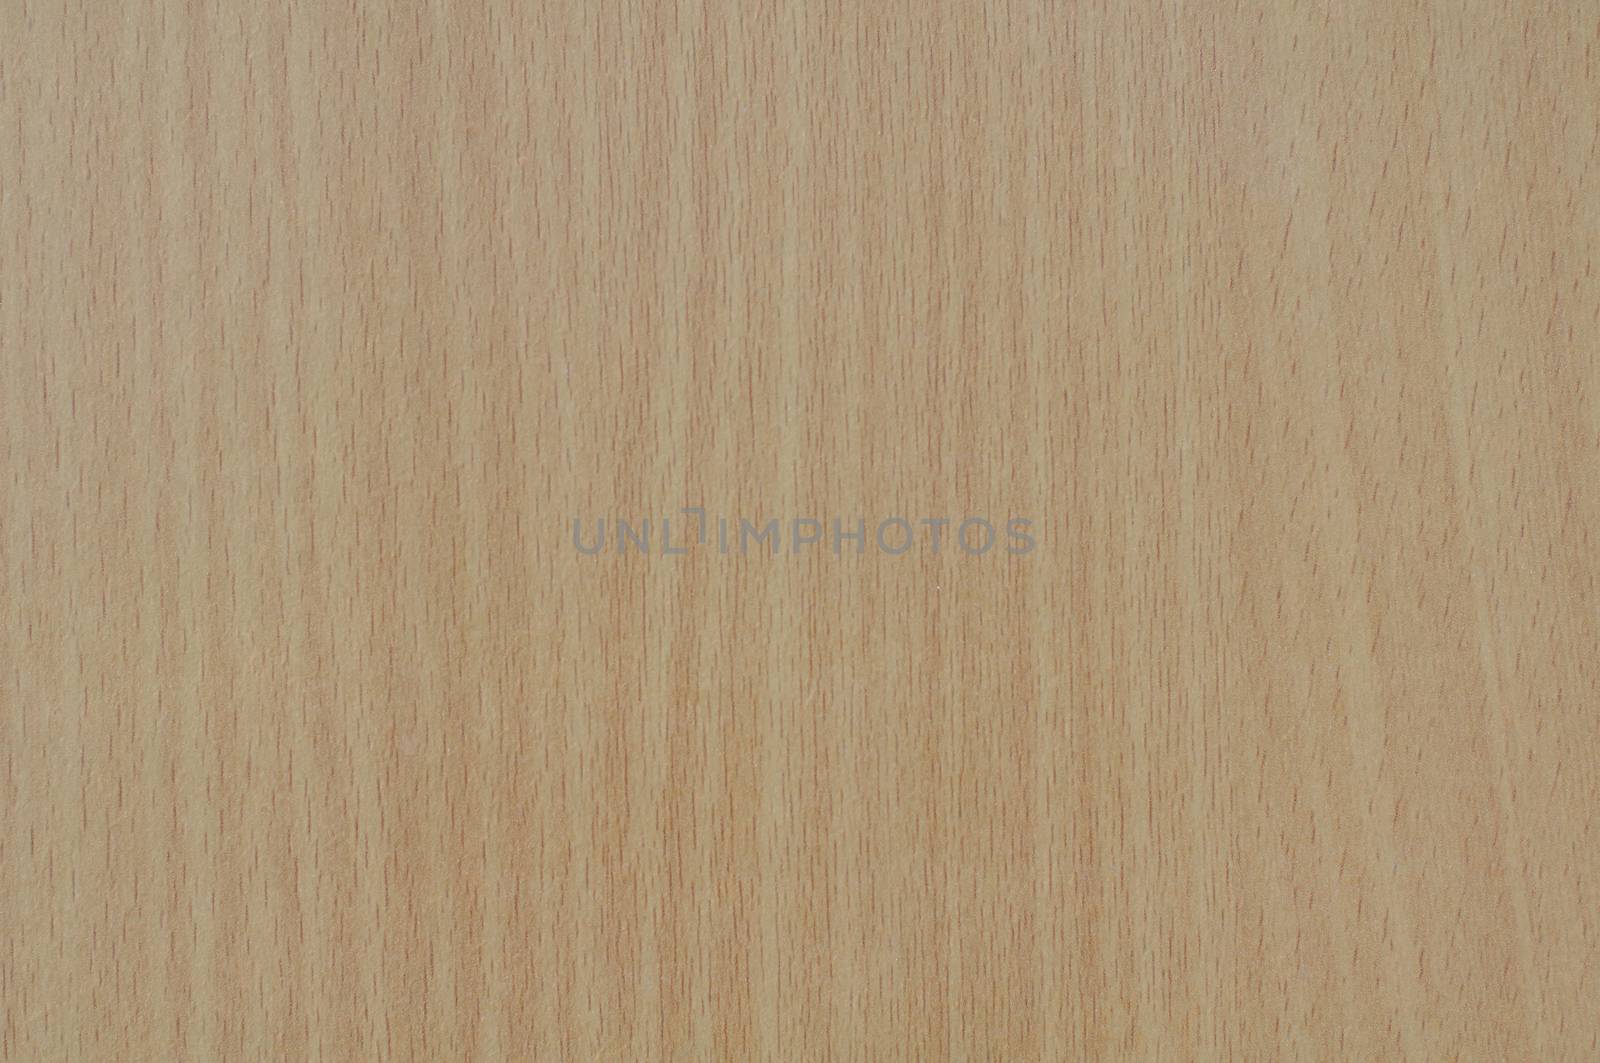 High quality wood grain texture by Sorapop